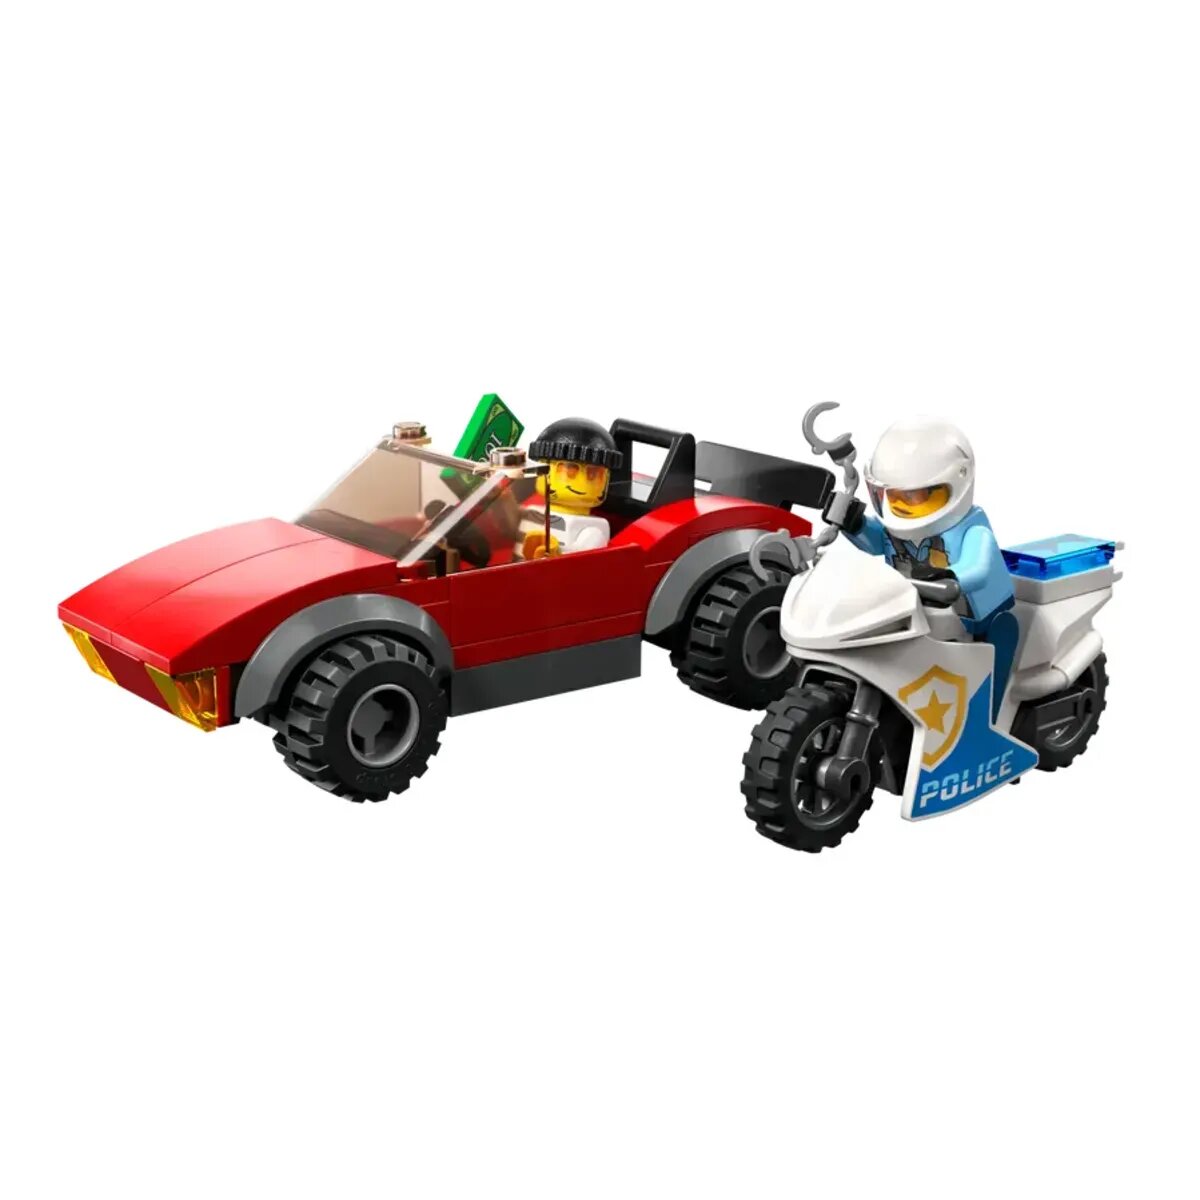 LEGO® City Police 60392 Verfolgungsjagd mit dem Polizeimotorrad